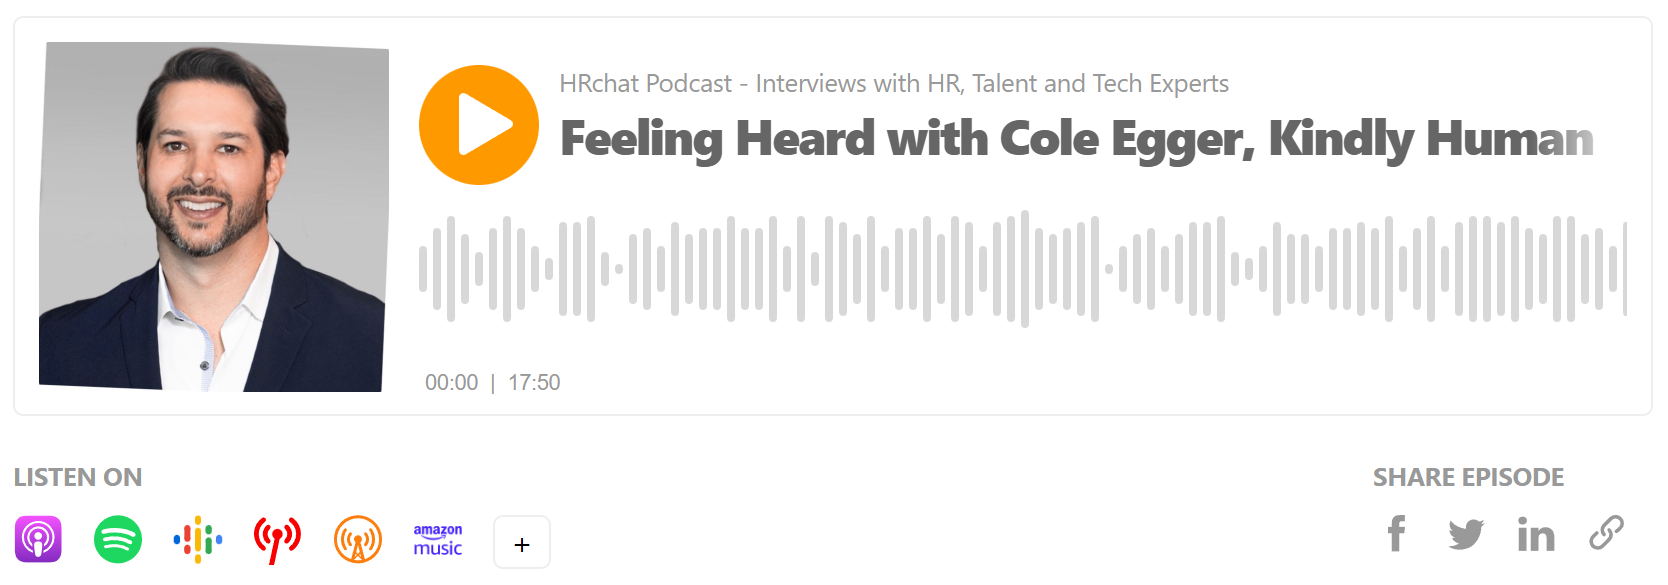 Cole Egger HRchat Podcast